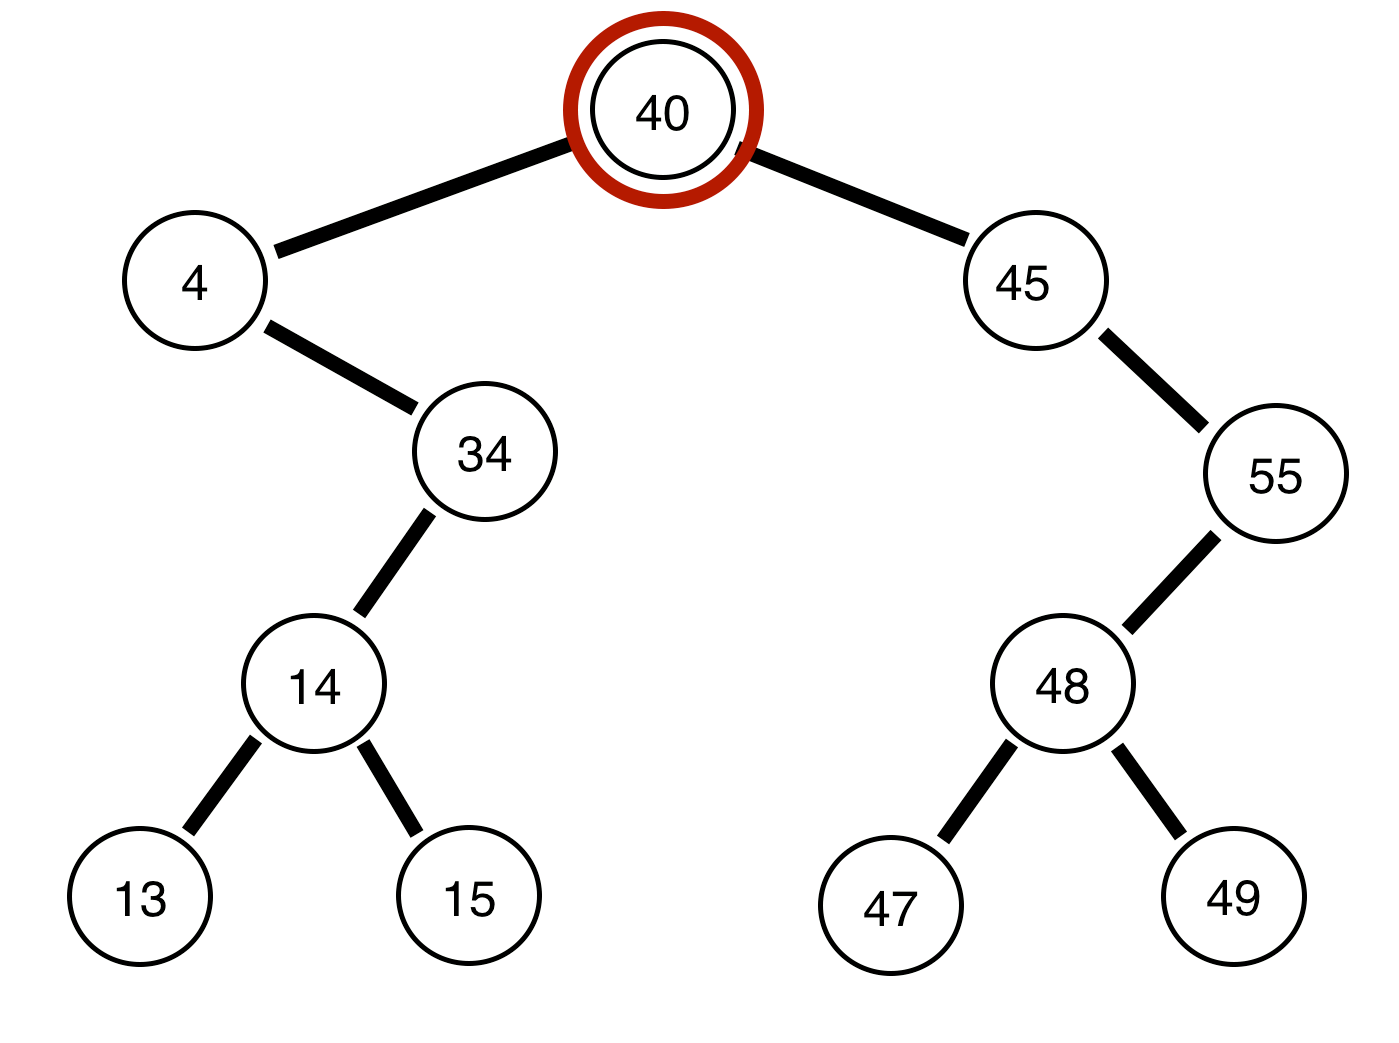 binary-tree-1-pre-order-austin-g-walters